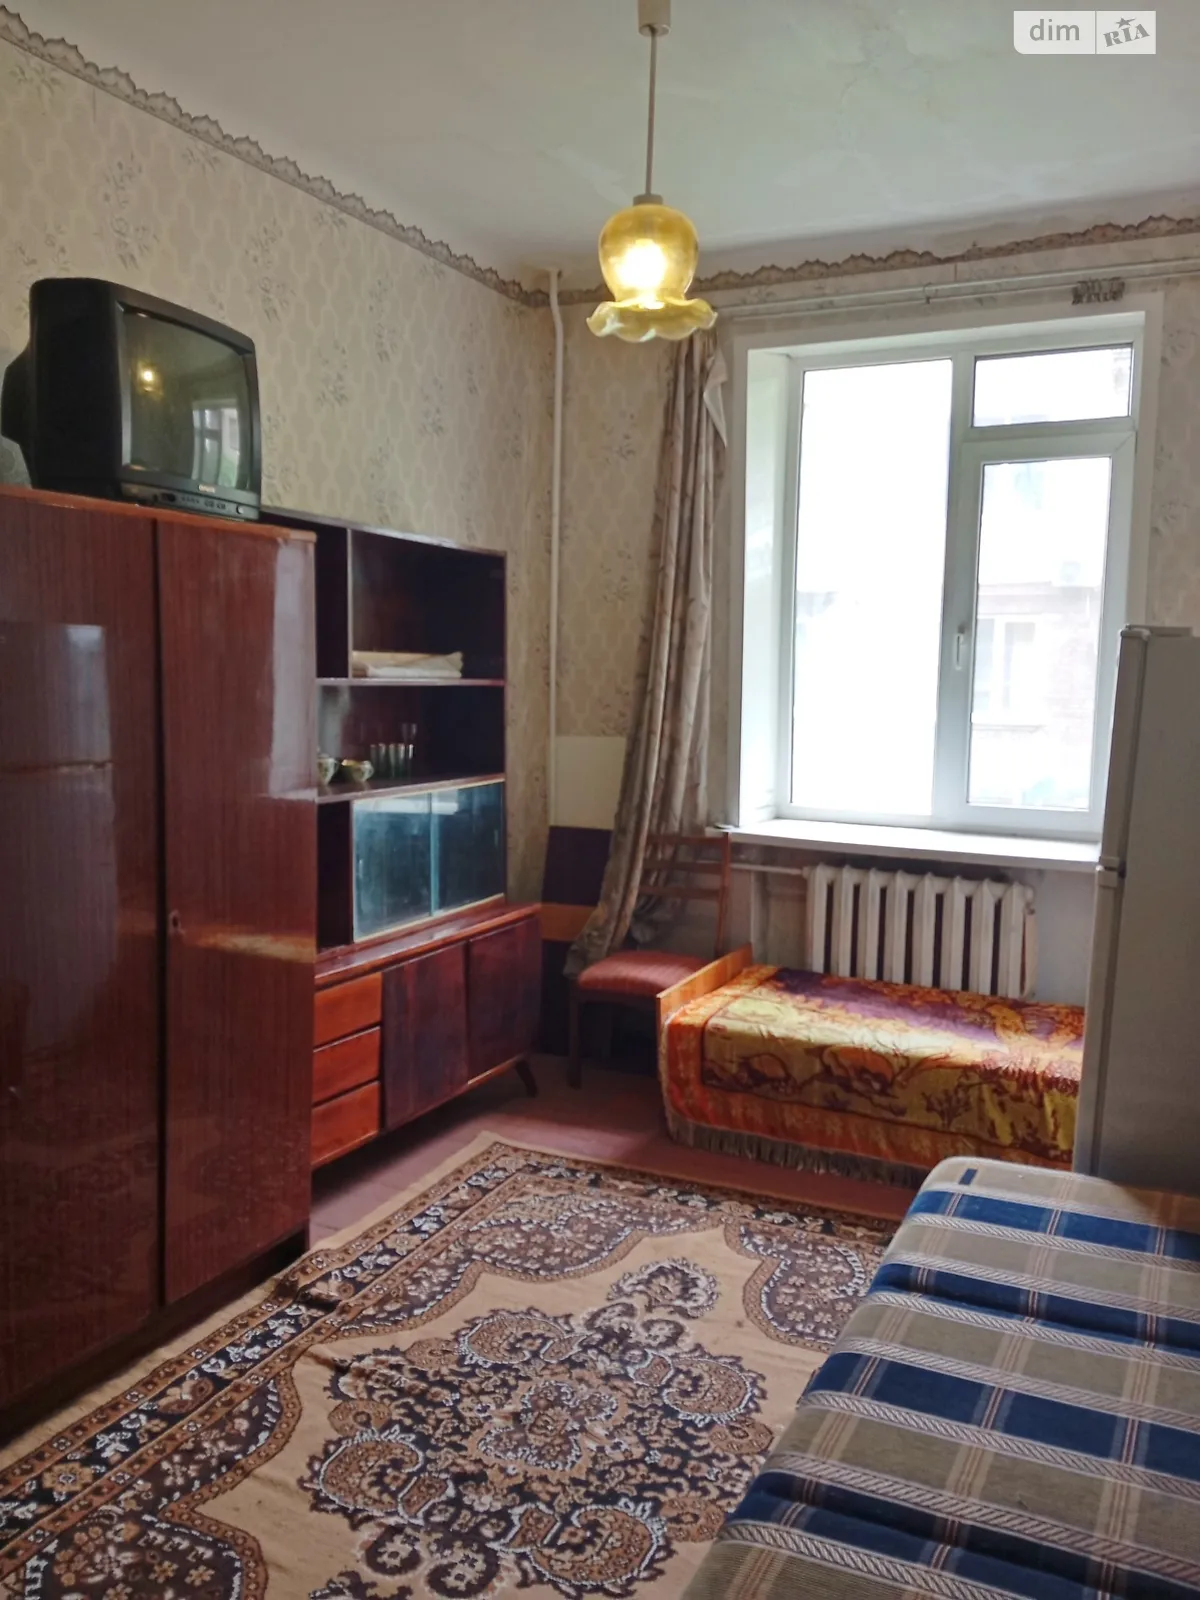 Продается комната 21 кв. м в Запорожье, цена: 4500 $ - фото 1